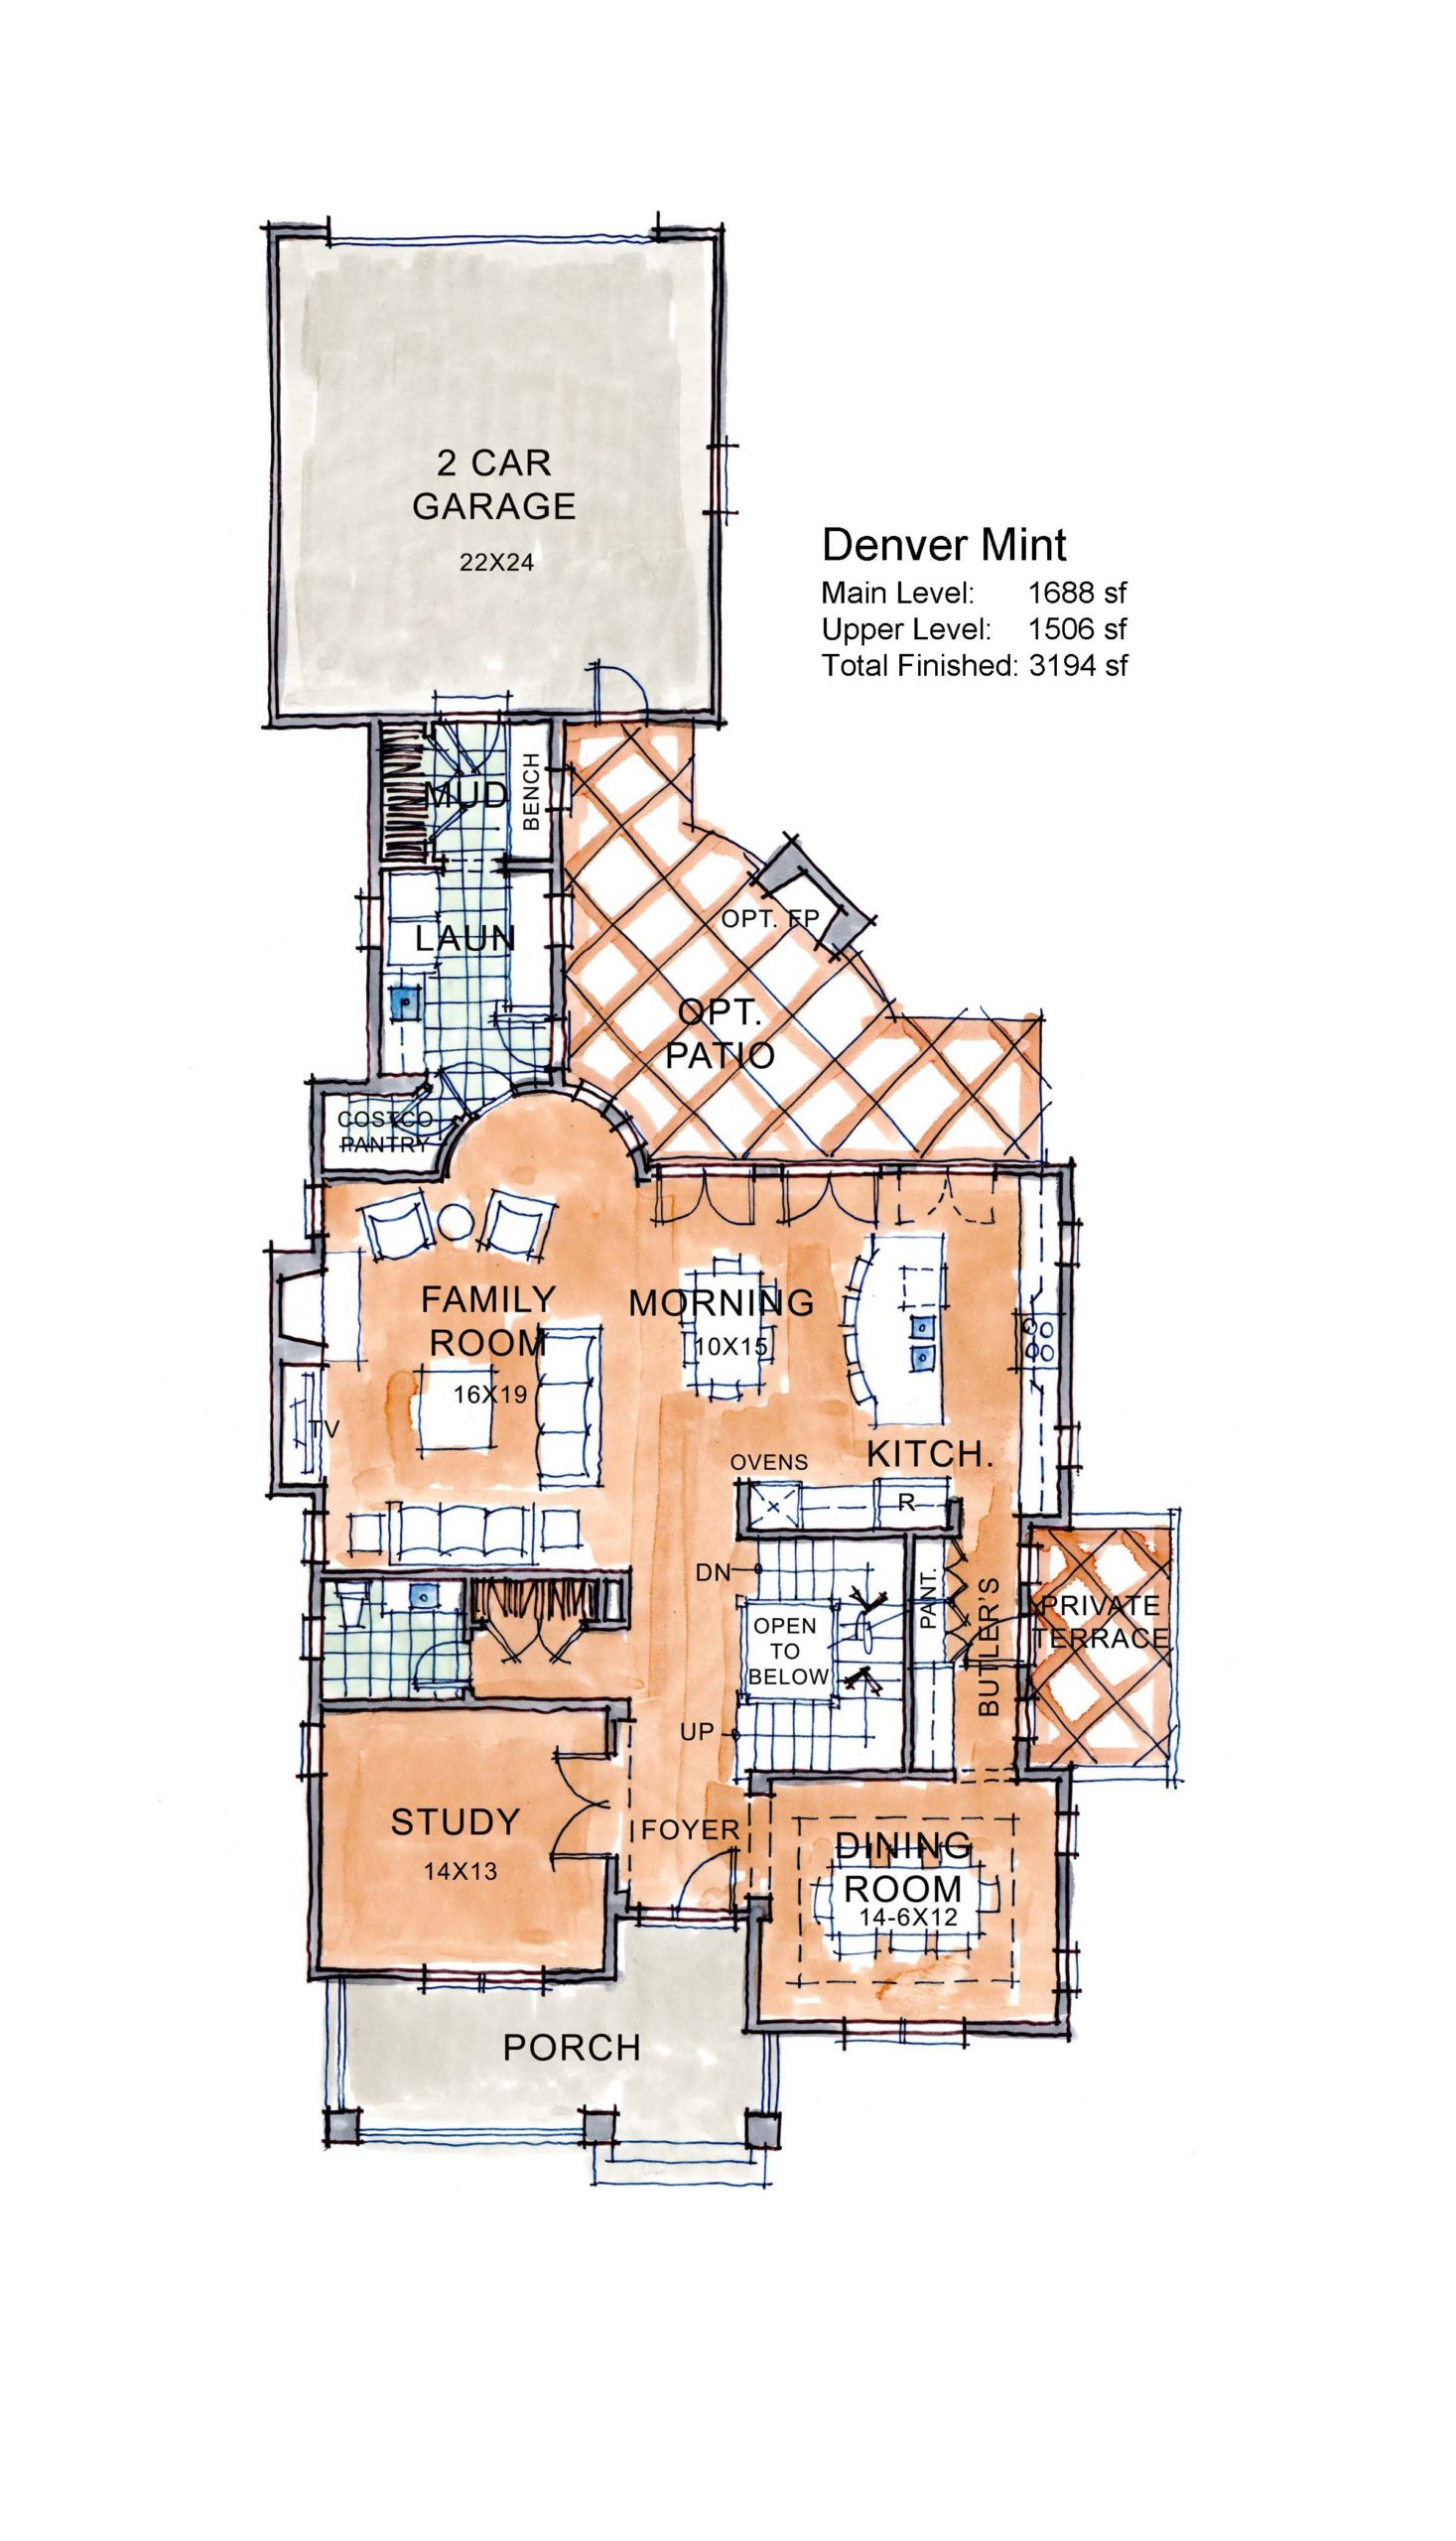 Denver Mint house plan and design